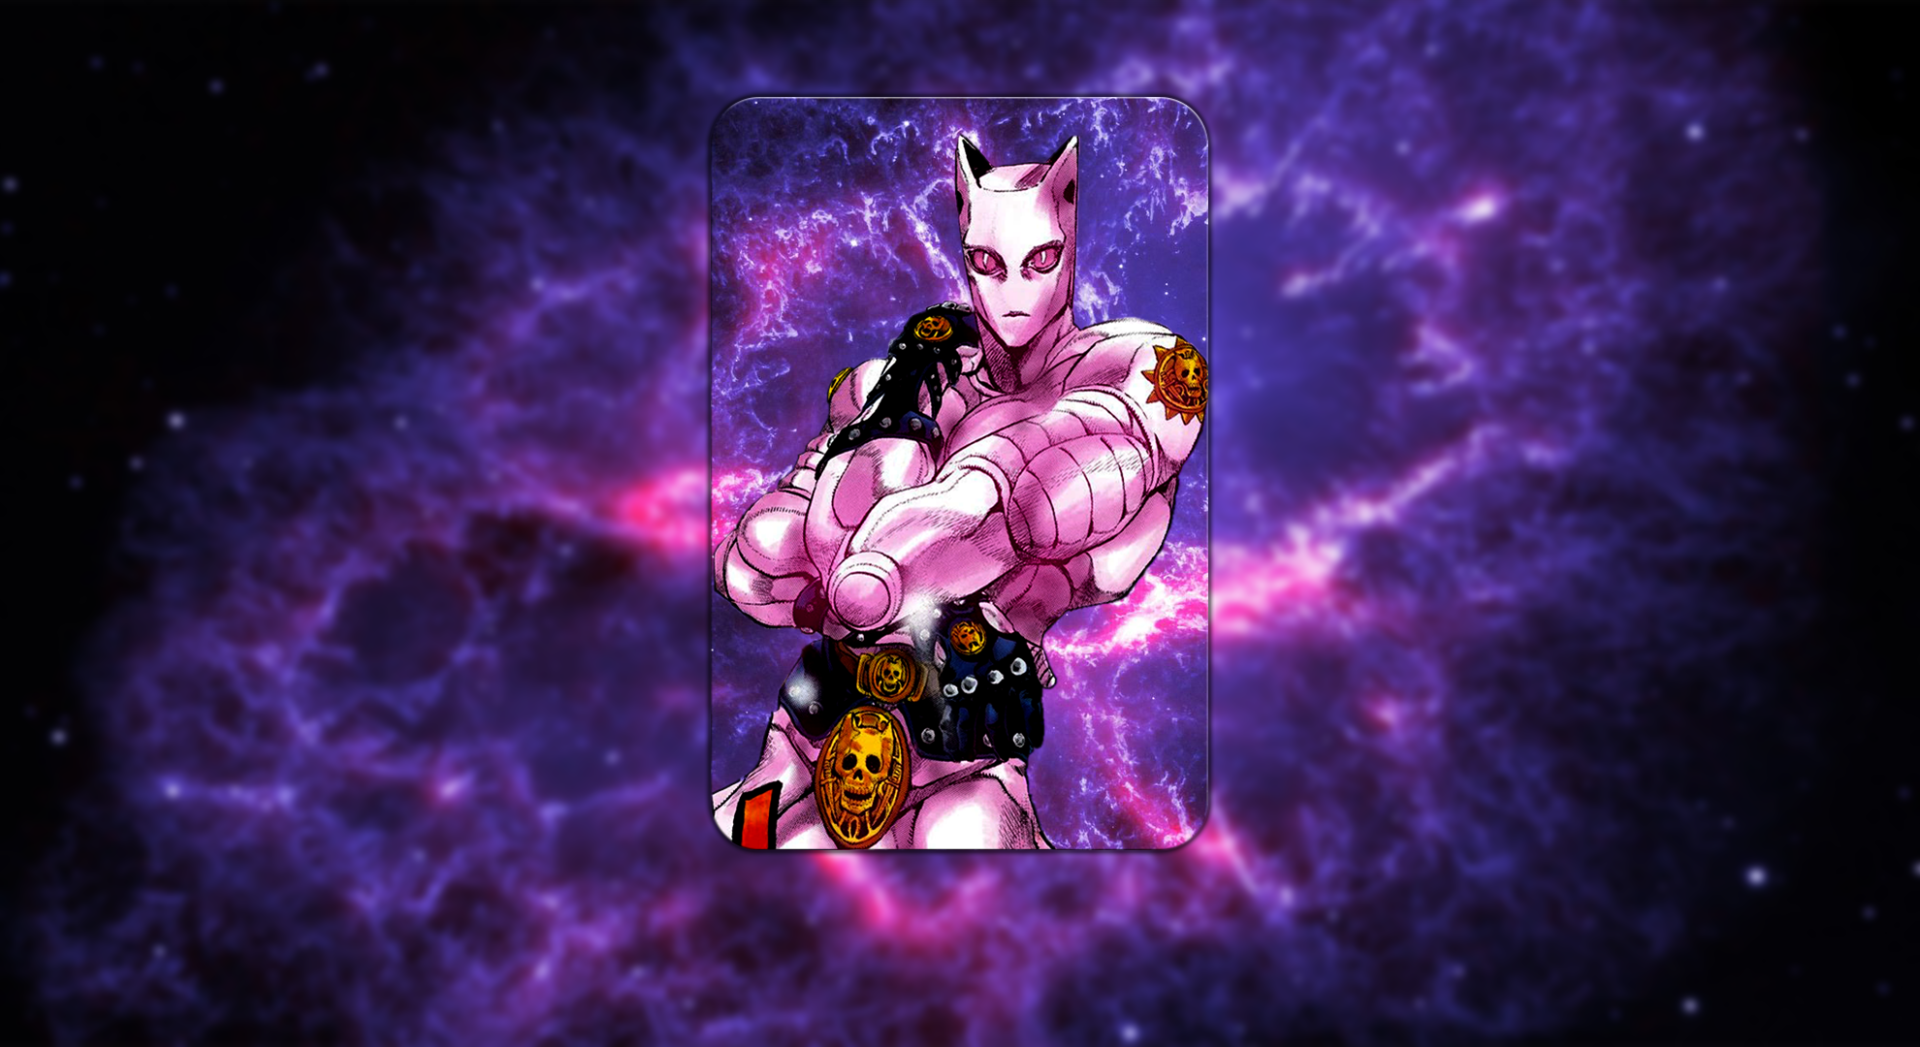 jojo wallpaper iphone,purple,violet,fictional character,graphic design,space